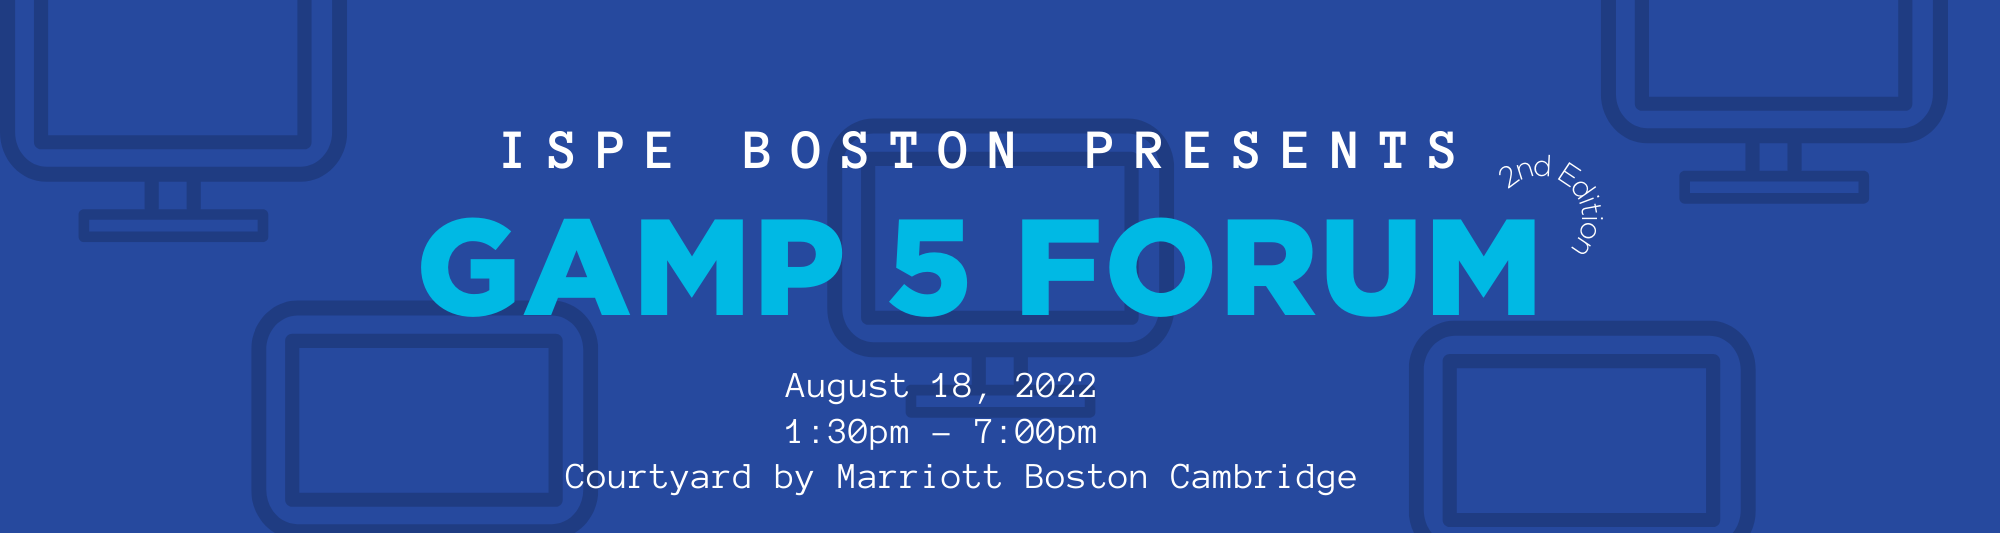 ISPE Boston GAMP 5 Forum